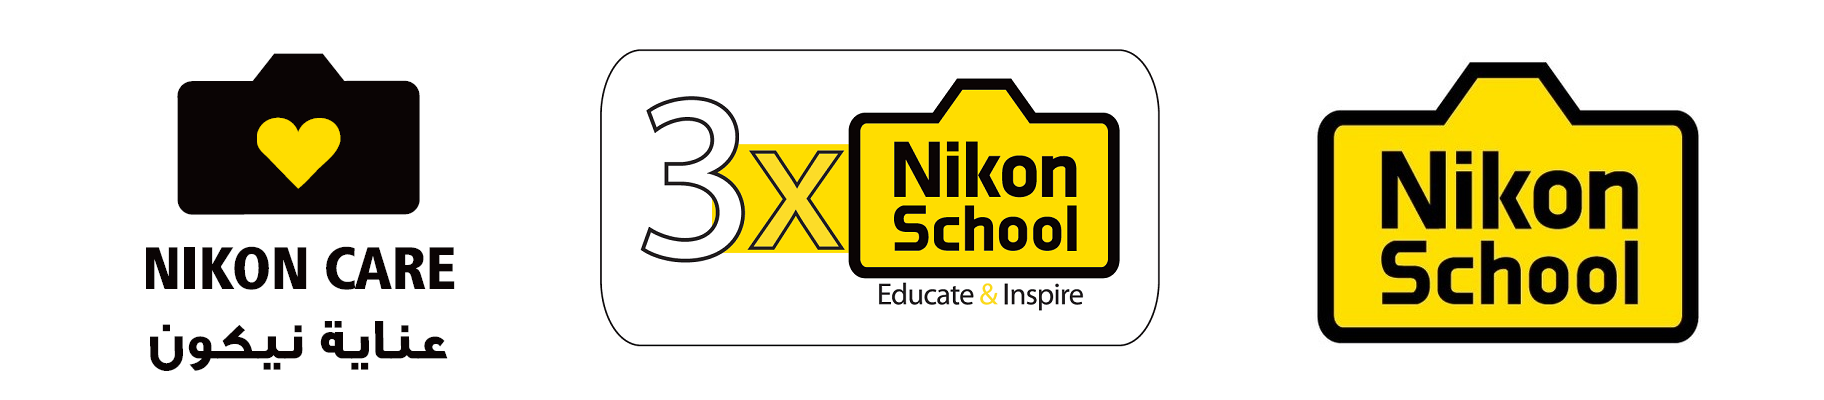 School-Nikon-D5-DSLR-Camera-CF-FX-Format-Dubai_UAE-GCC-Sharjah-Abu-Dhabi-Ajman-Dubaimachines.com-Dubaimachines